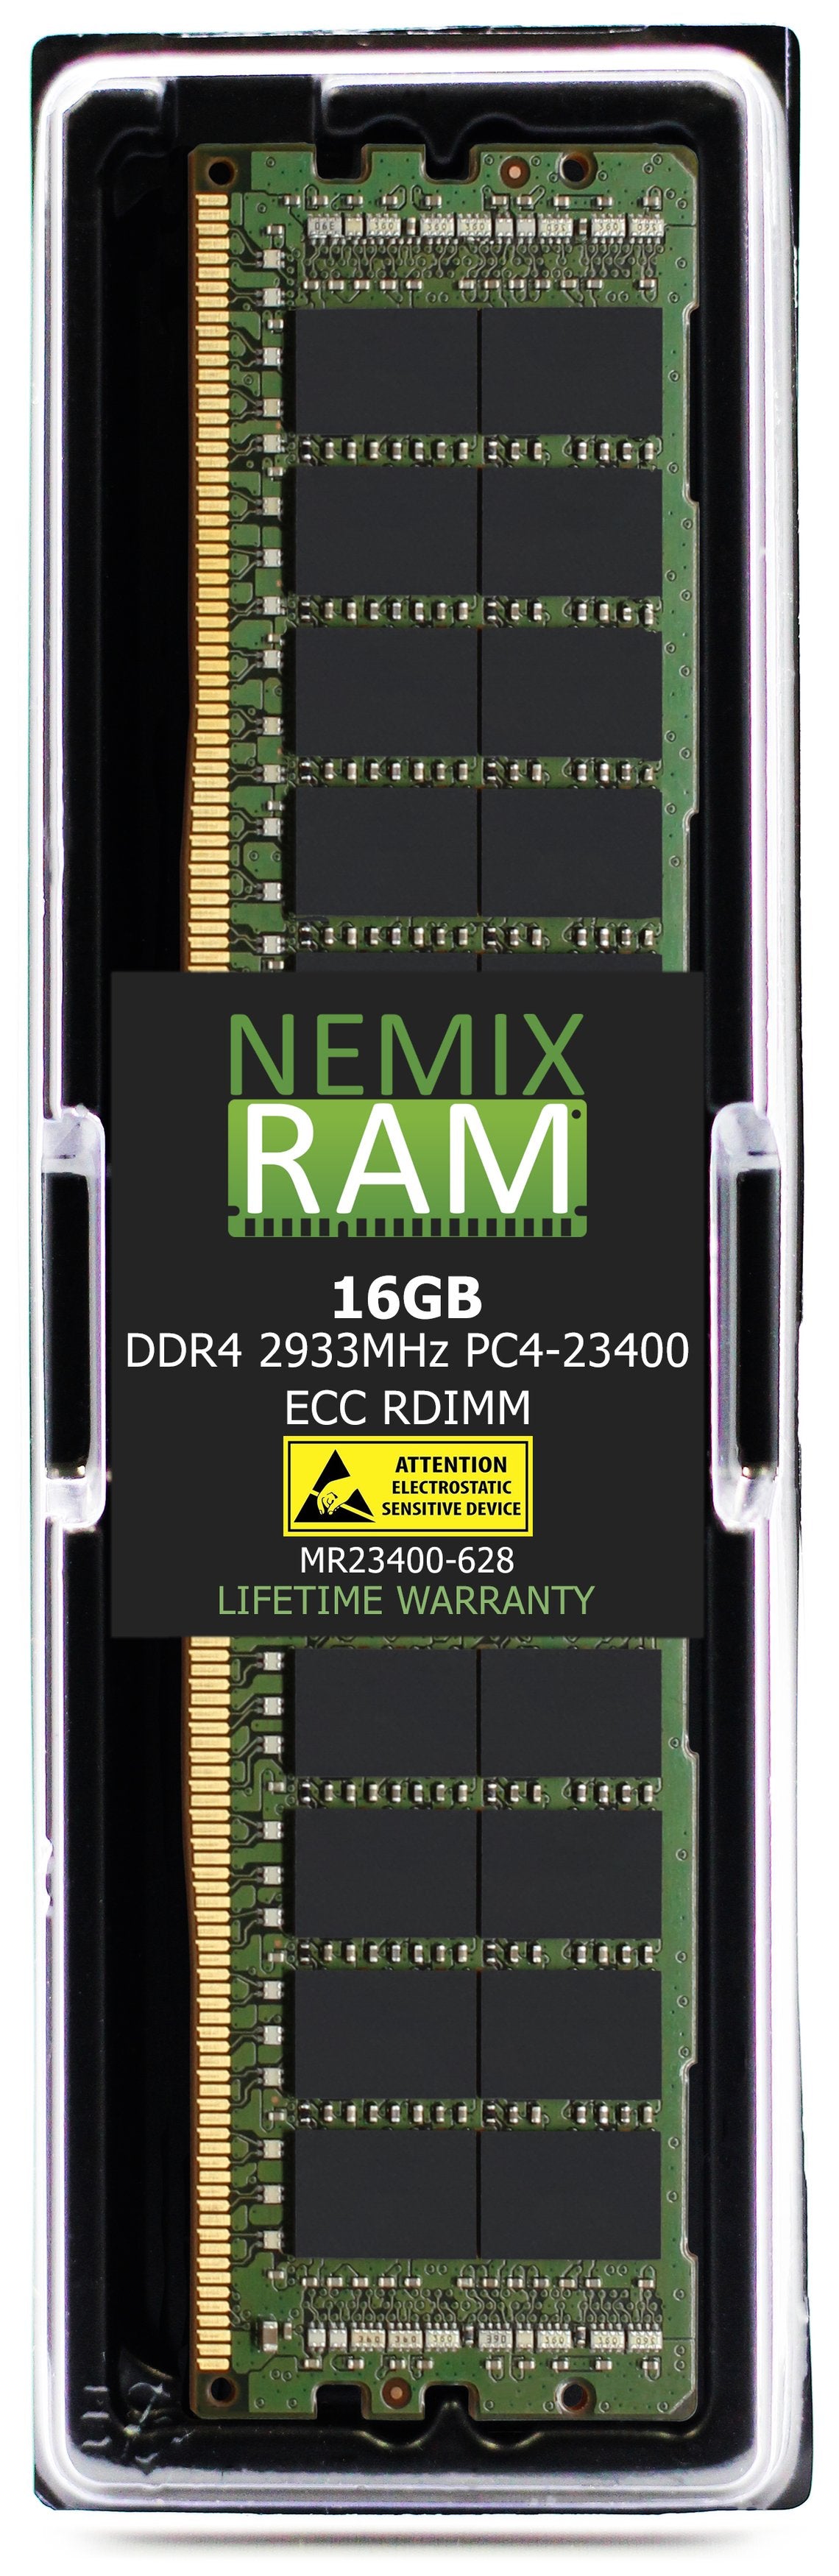 DELL PowerEdge R740XD Memory Upgrade